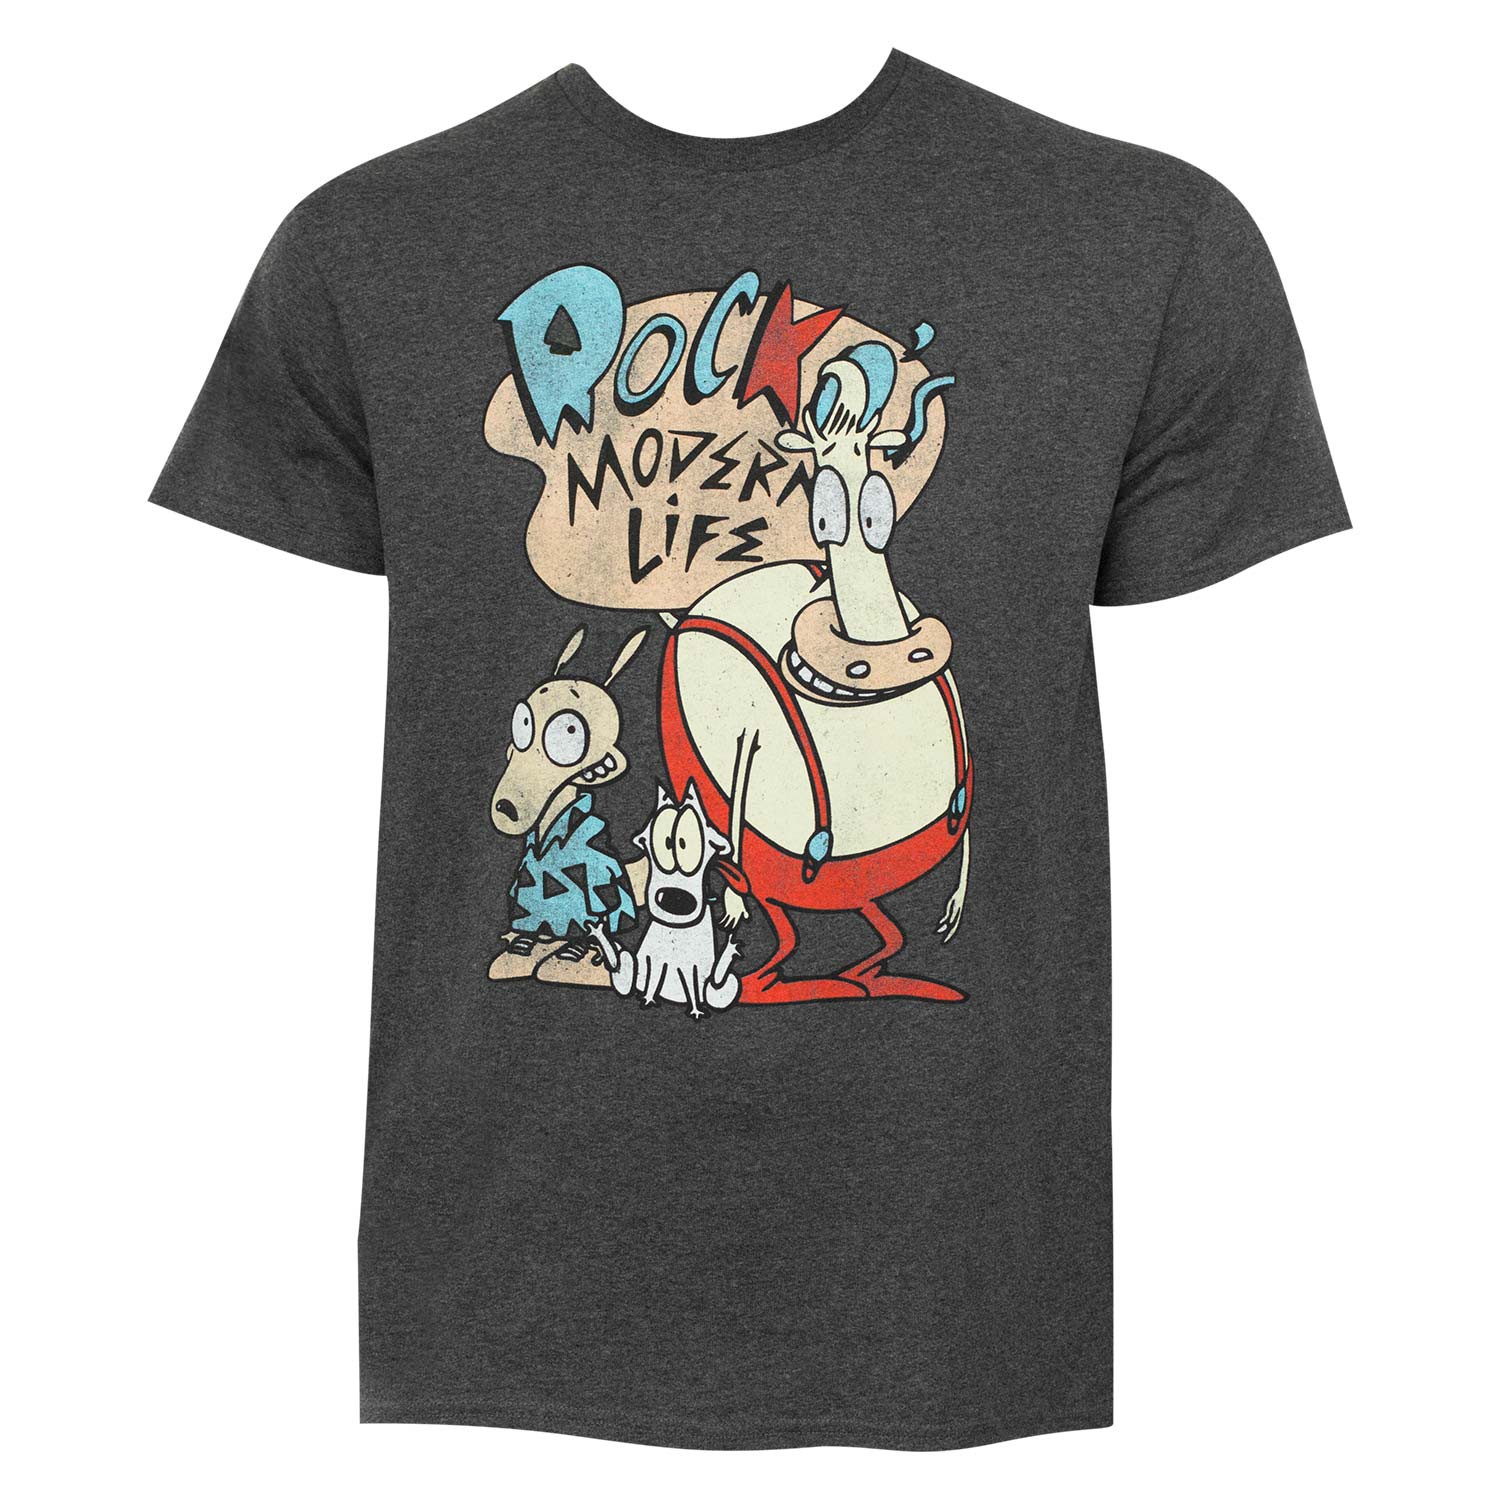 Rockos Modern Life Grey Logo Tee Shirt